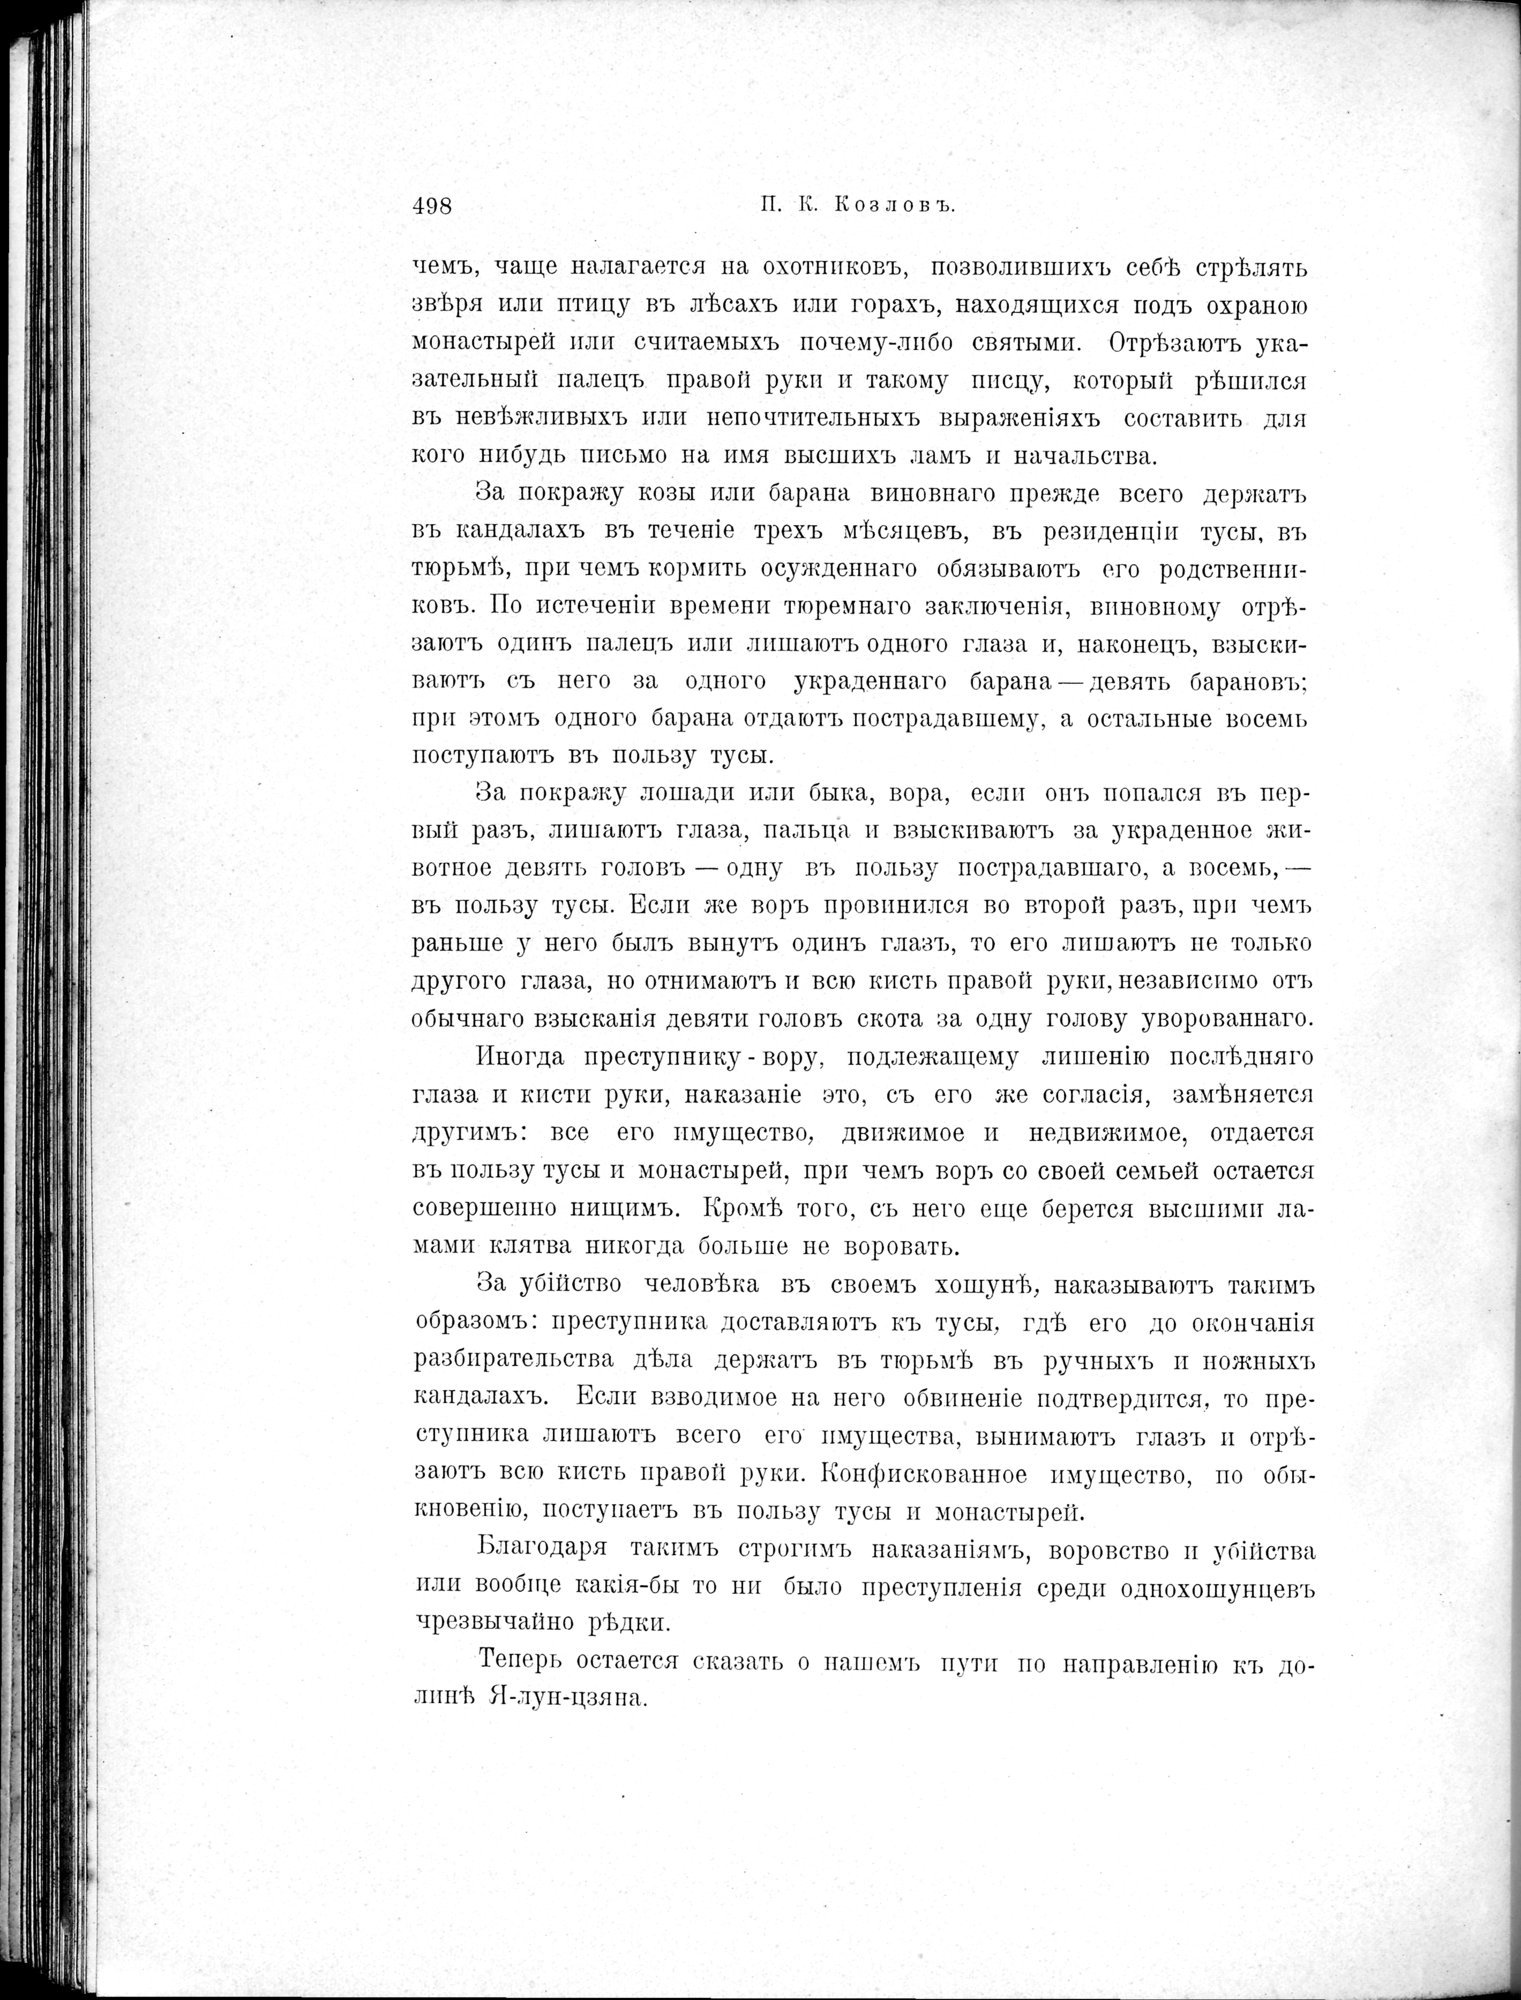 Mongoliia i Kam : vol.2 / Page 314 (Grayscale High Resolution Image)